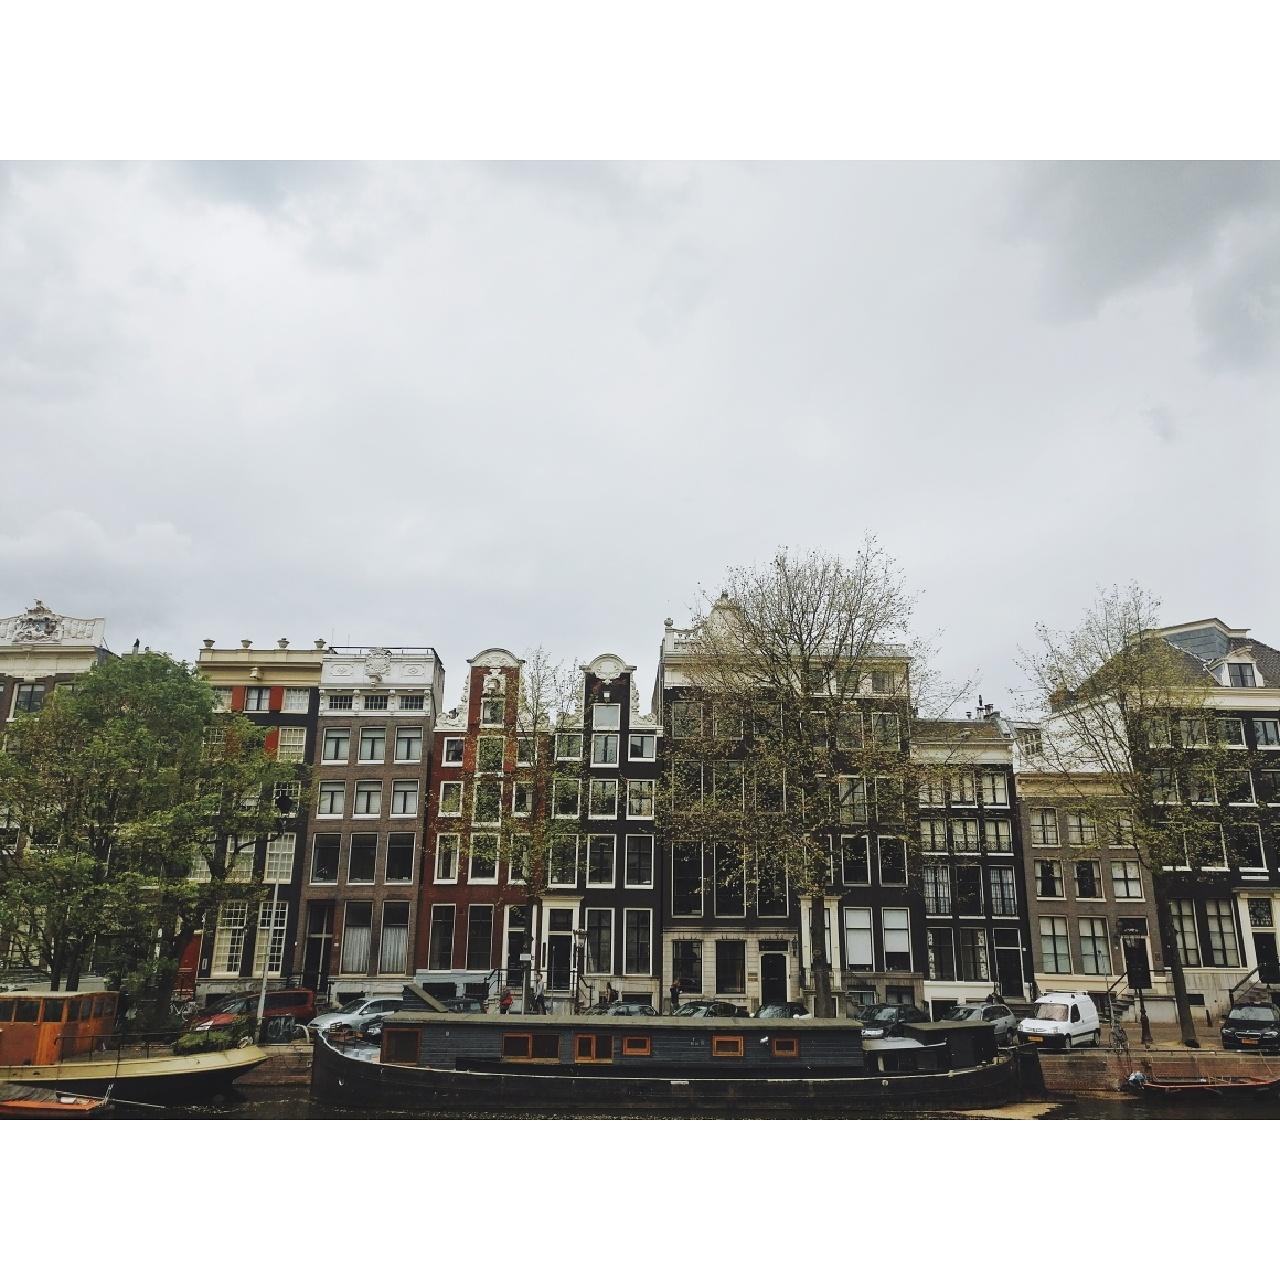 Amsterdam 👀 Fensterausblick 

#Amsterdam #traveldiary